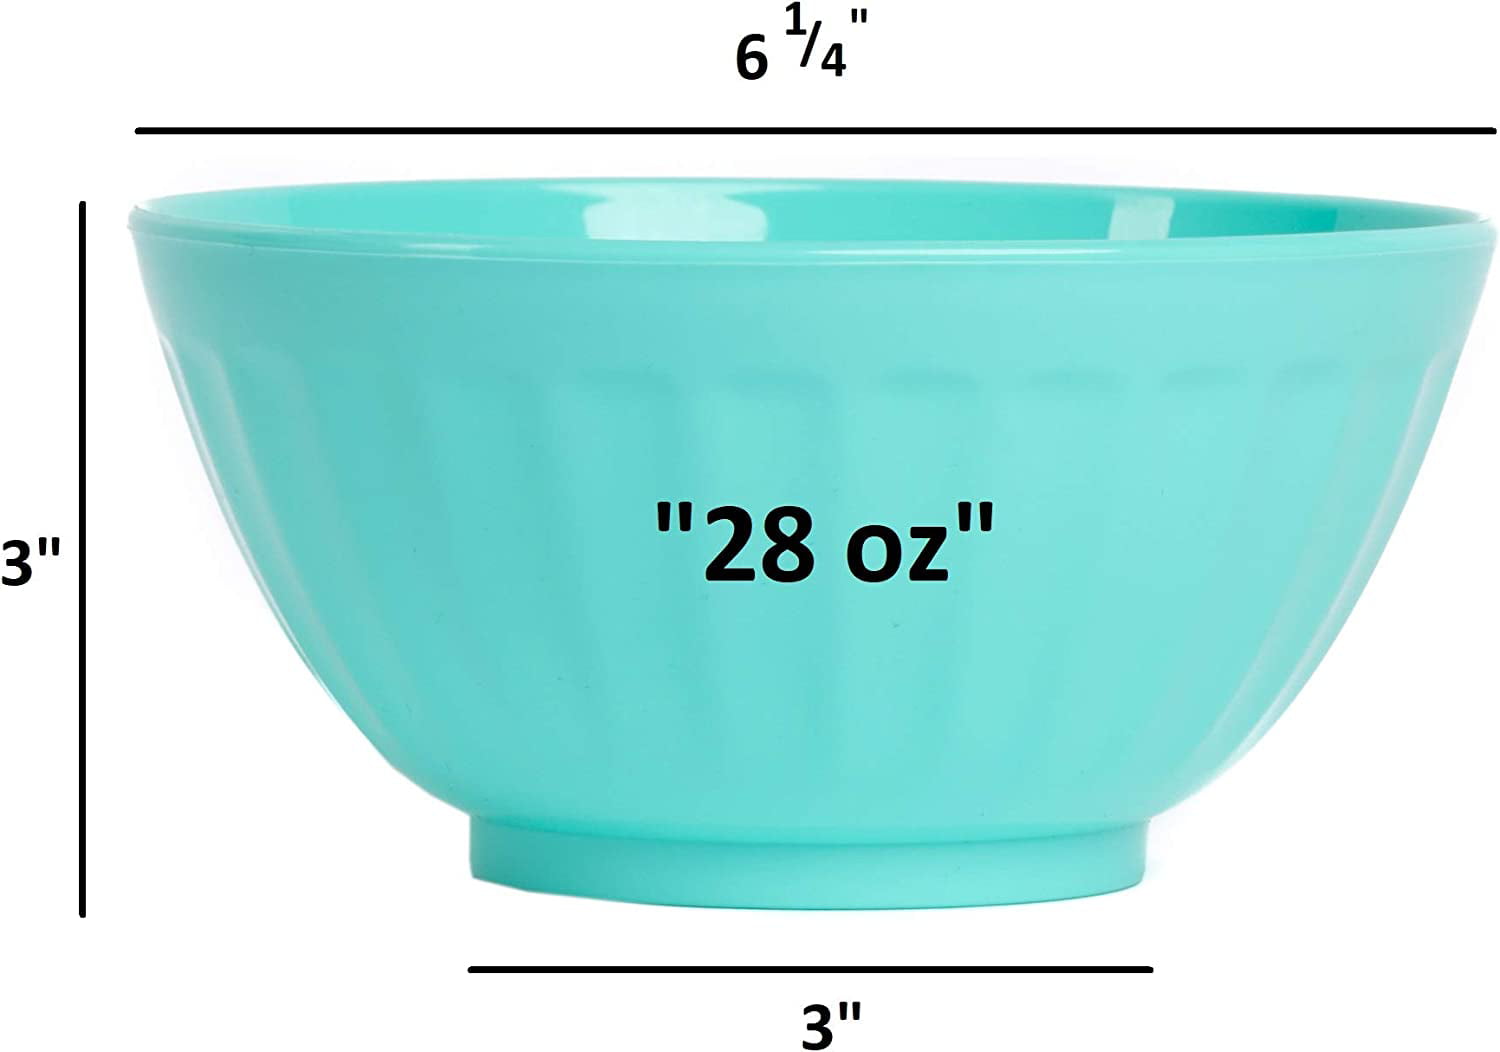 Klickpick Home 10 inch Plastic Bowls Set of 6 - 64 Ounce (2 Liter) Capacity Extra Large Cereal Salad Serving Mixing Bowl Microwave Dishwasher Safe